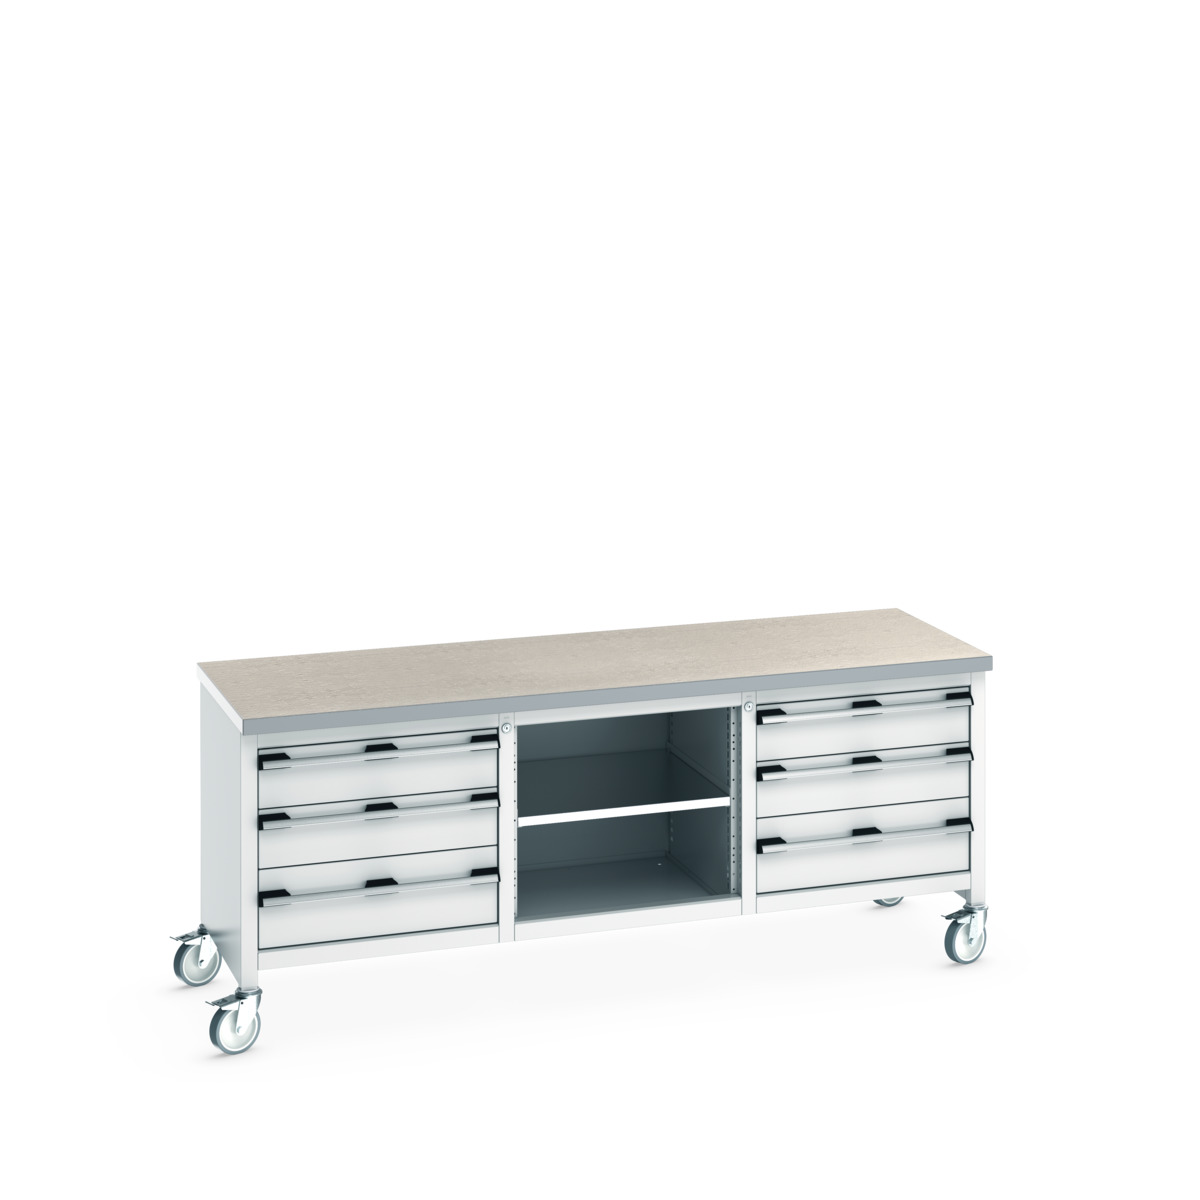 41002132.16V - cubio mobile storage bench (lino)